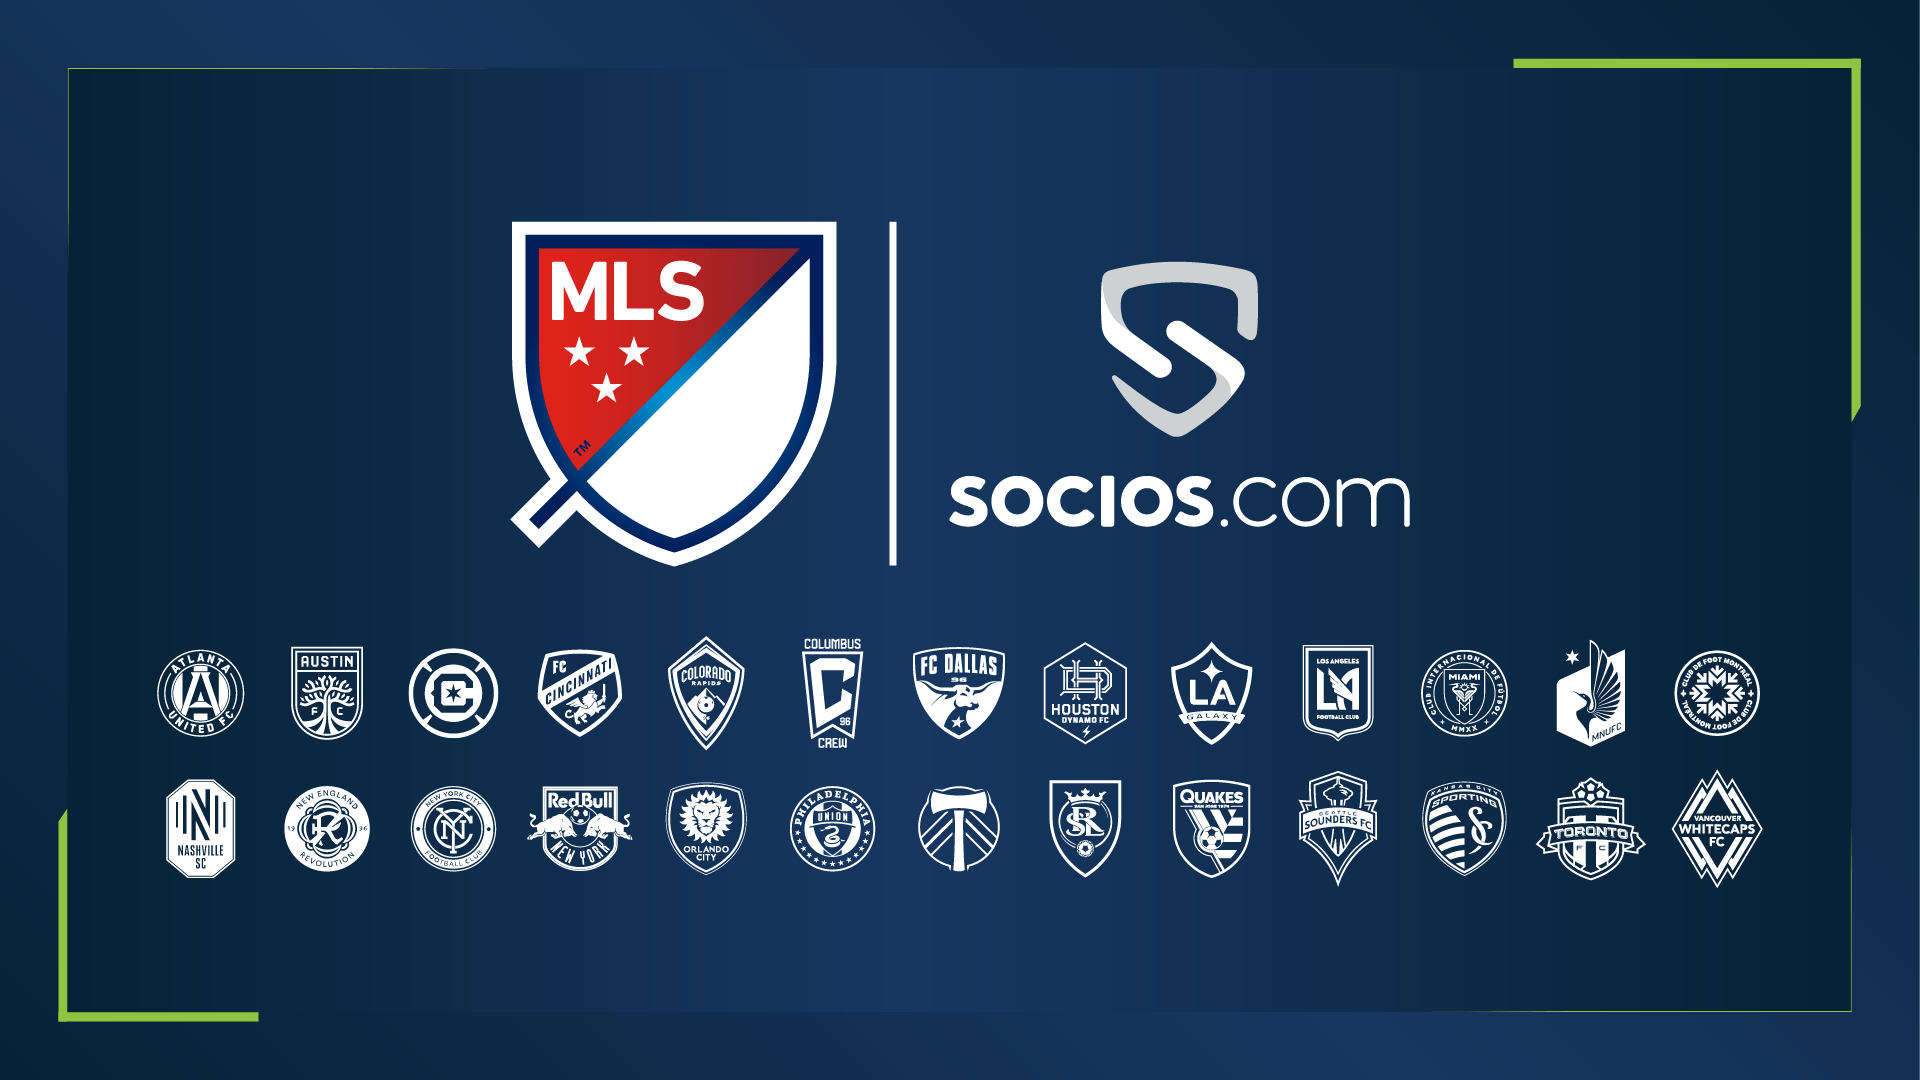 prijedlog bife miris  Socios.com becomes official fan loyalty partner of 26 MLS clubs |  MLSSoccer.com